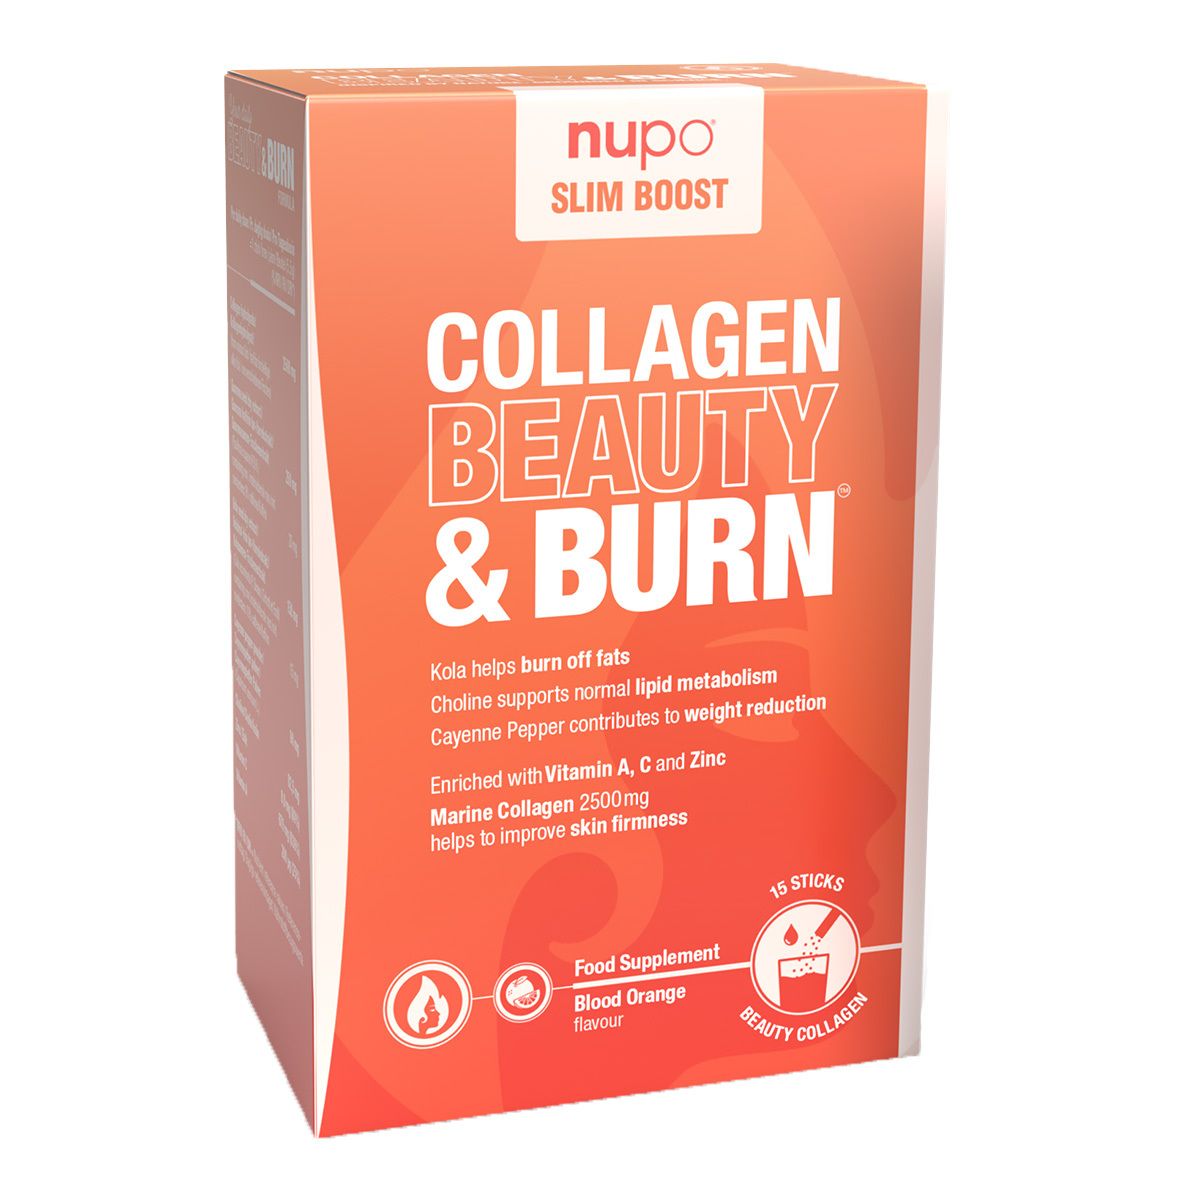 Nupo Slim Boost Collagen Beauty Burn - 15 sticks 